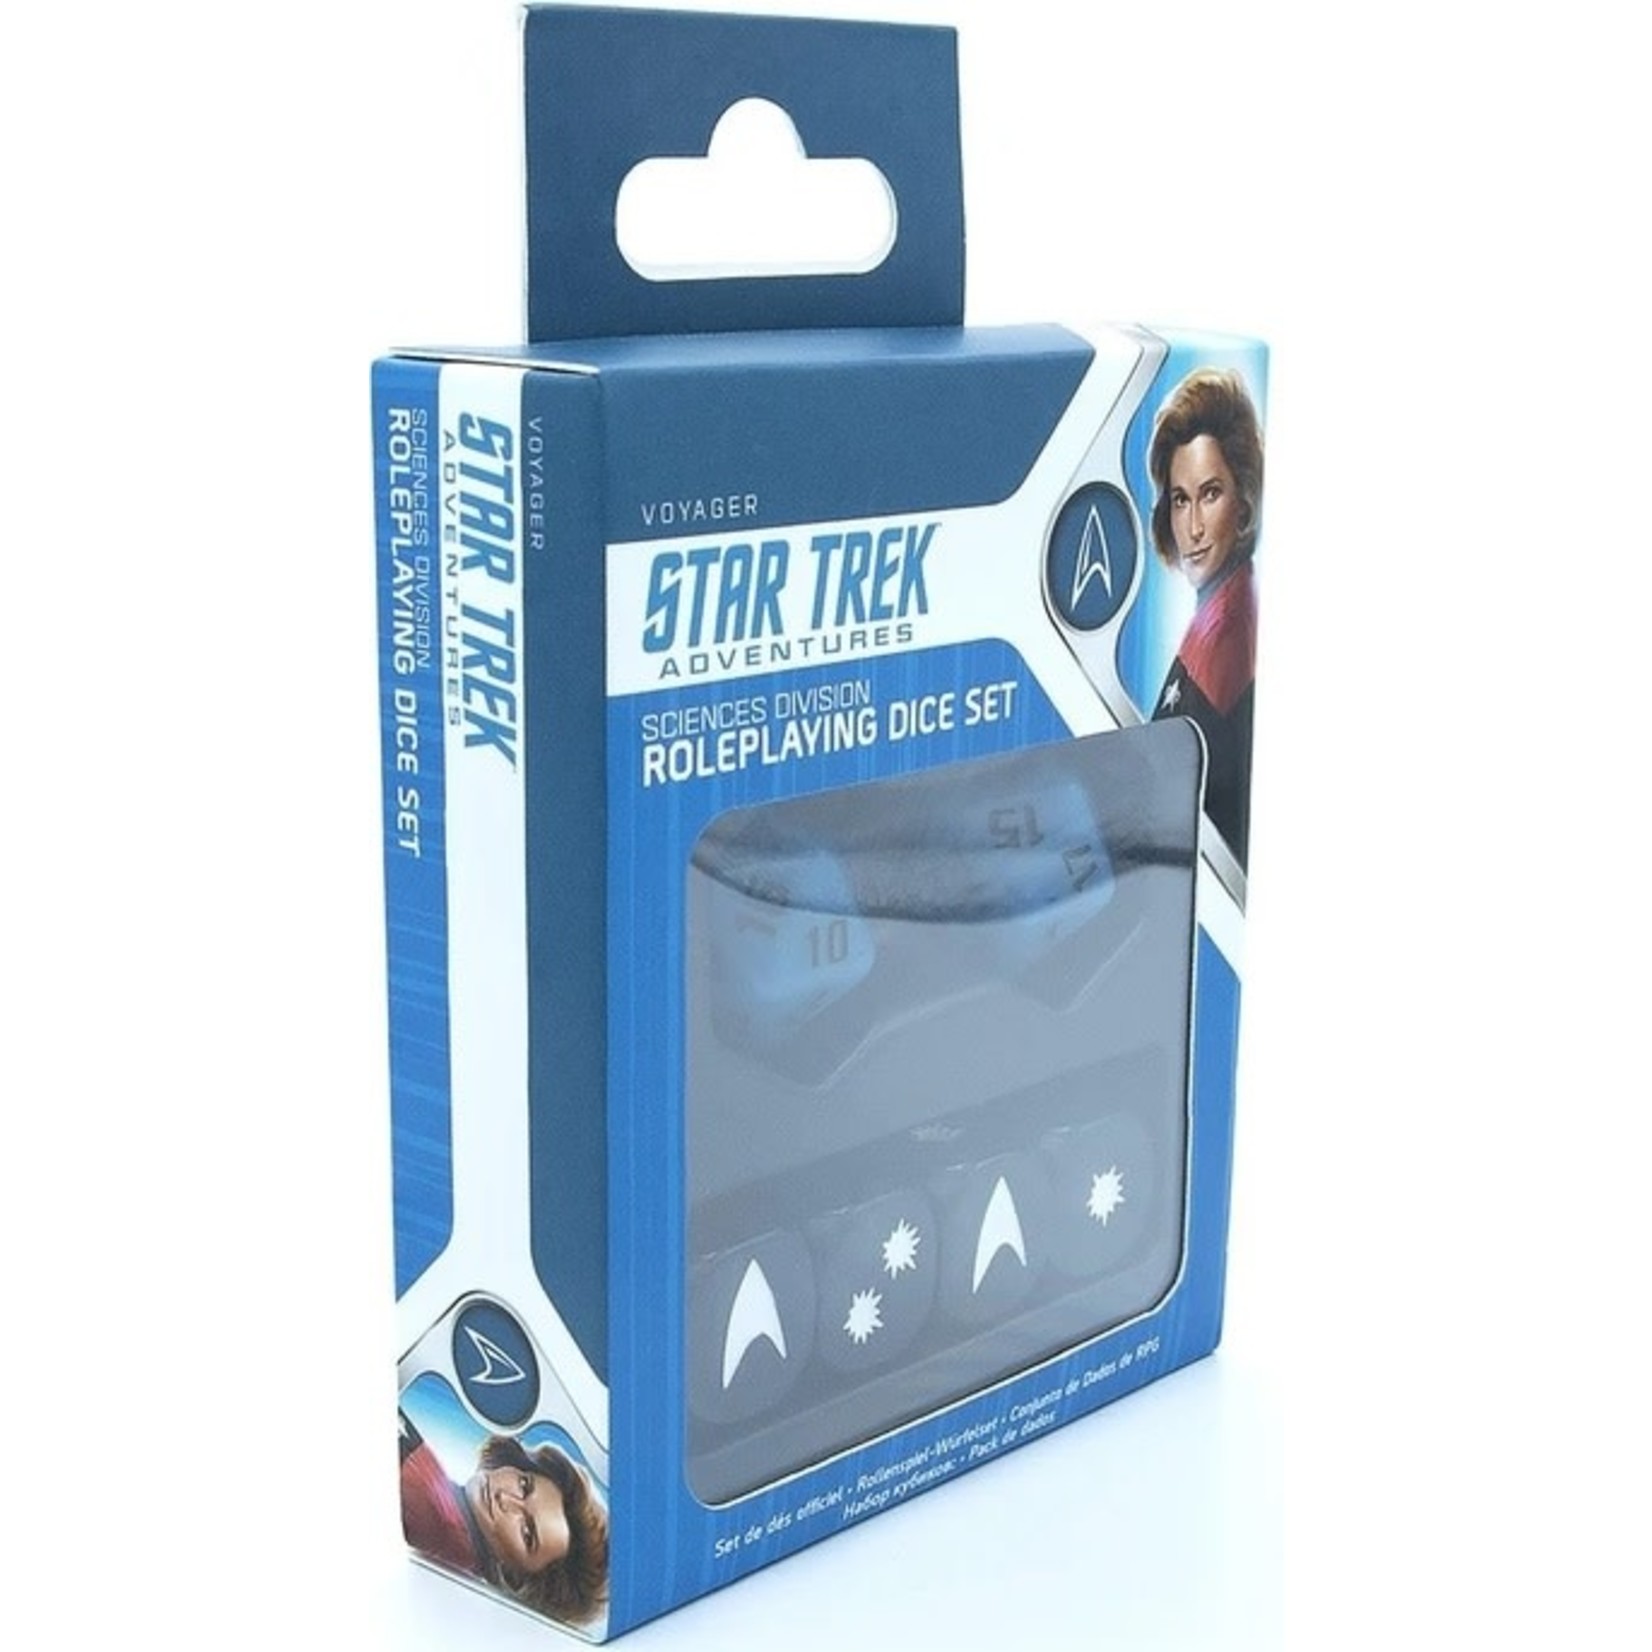 Star Trek STAR TREK ADV. DICE SET   SCIENCE DIVISION REVISED